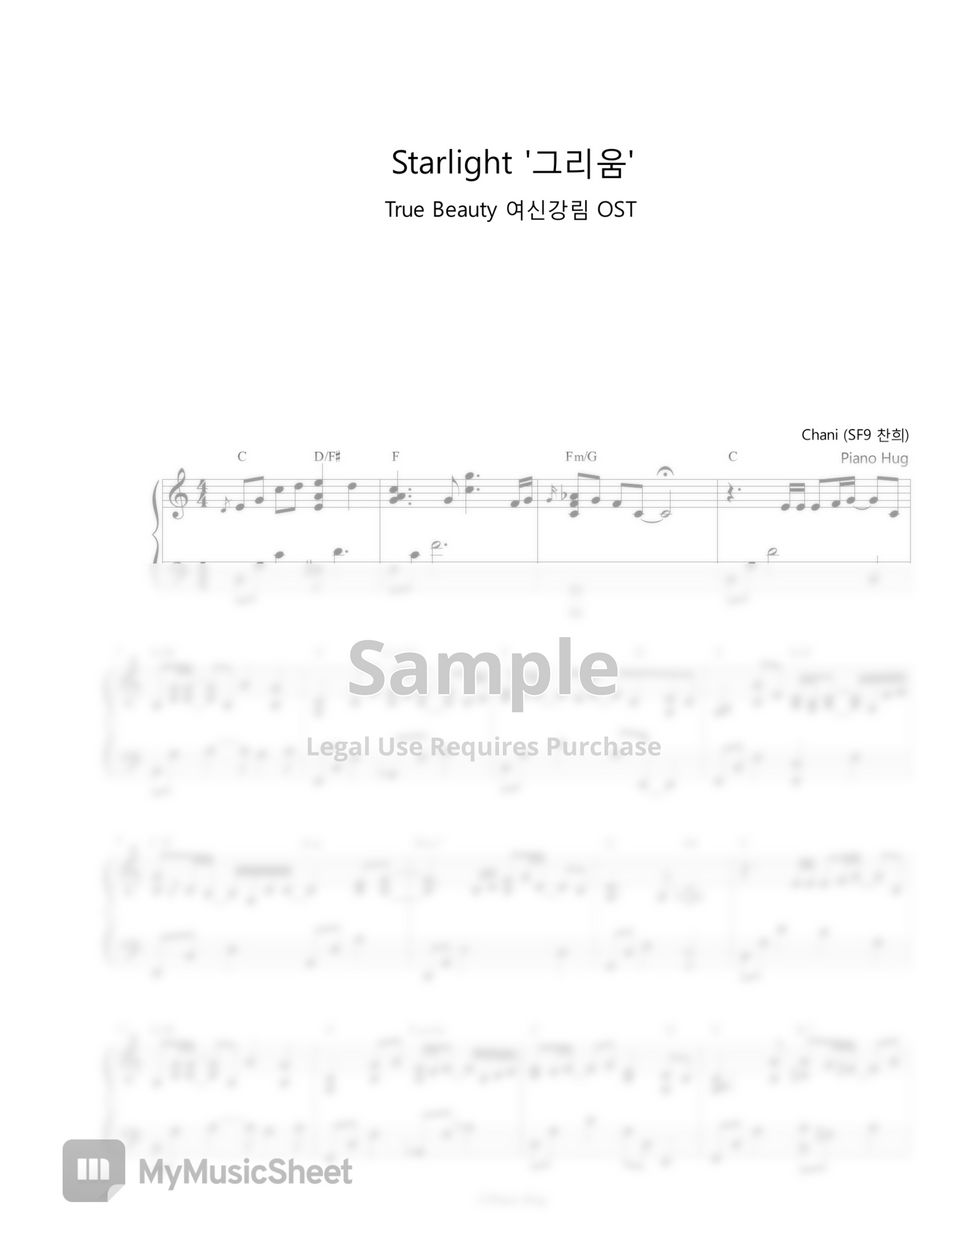 Chani (SF9) - Starlight (True Beauty OST) by Piano Hug